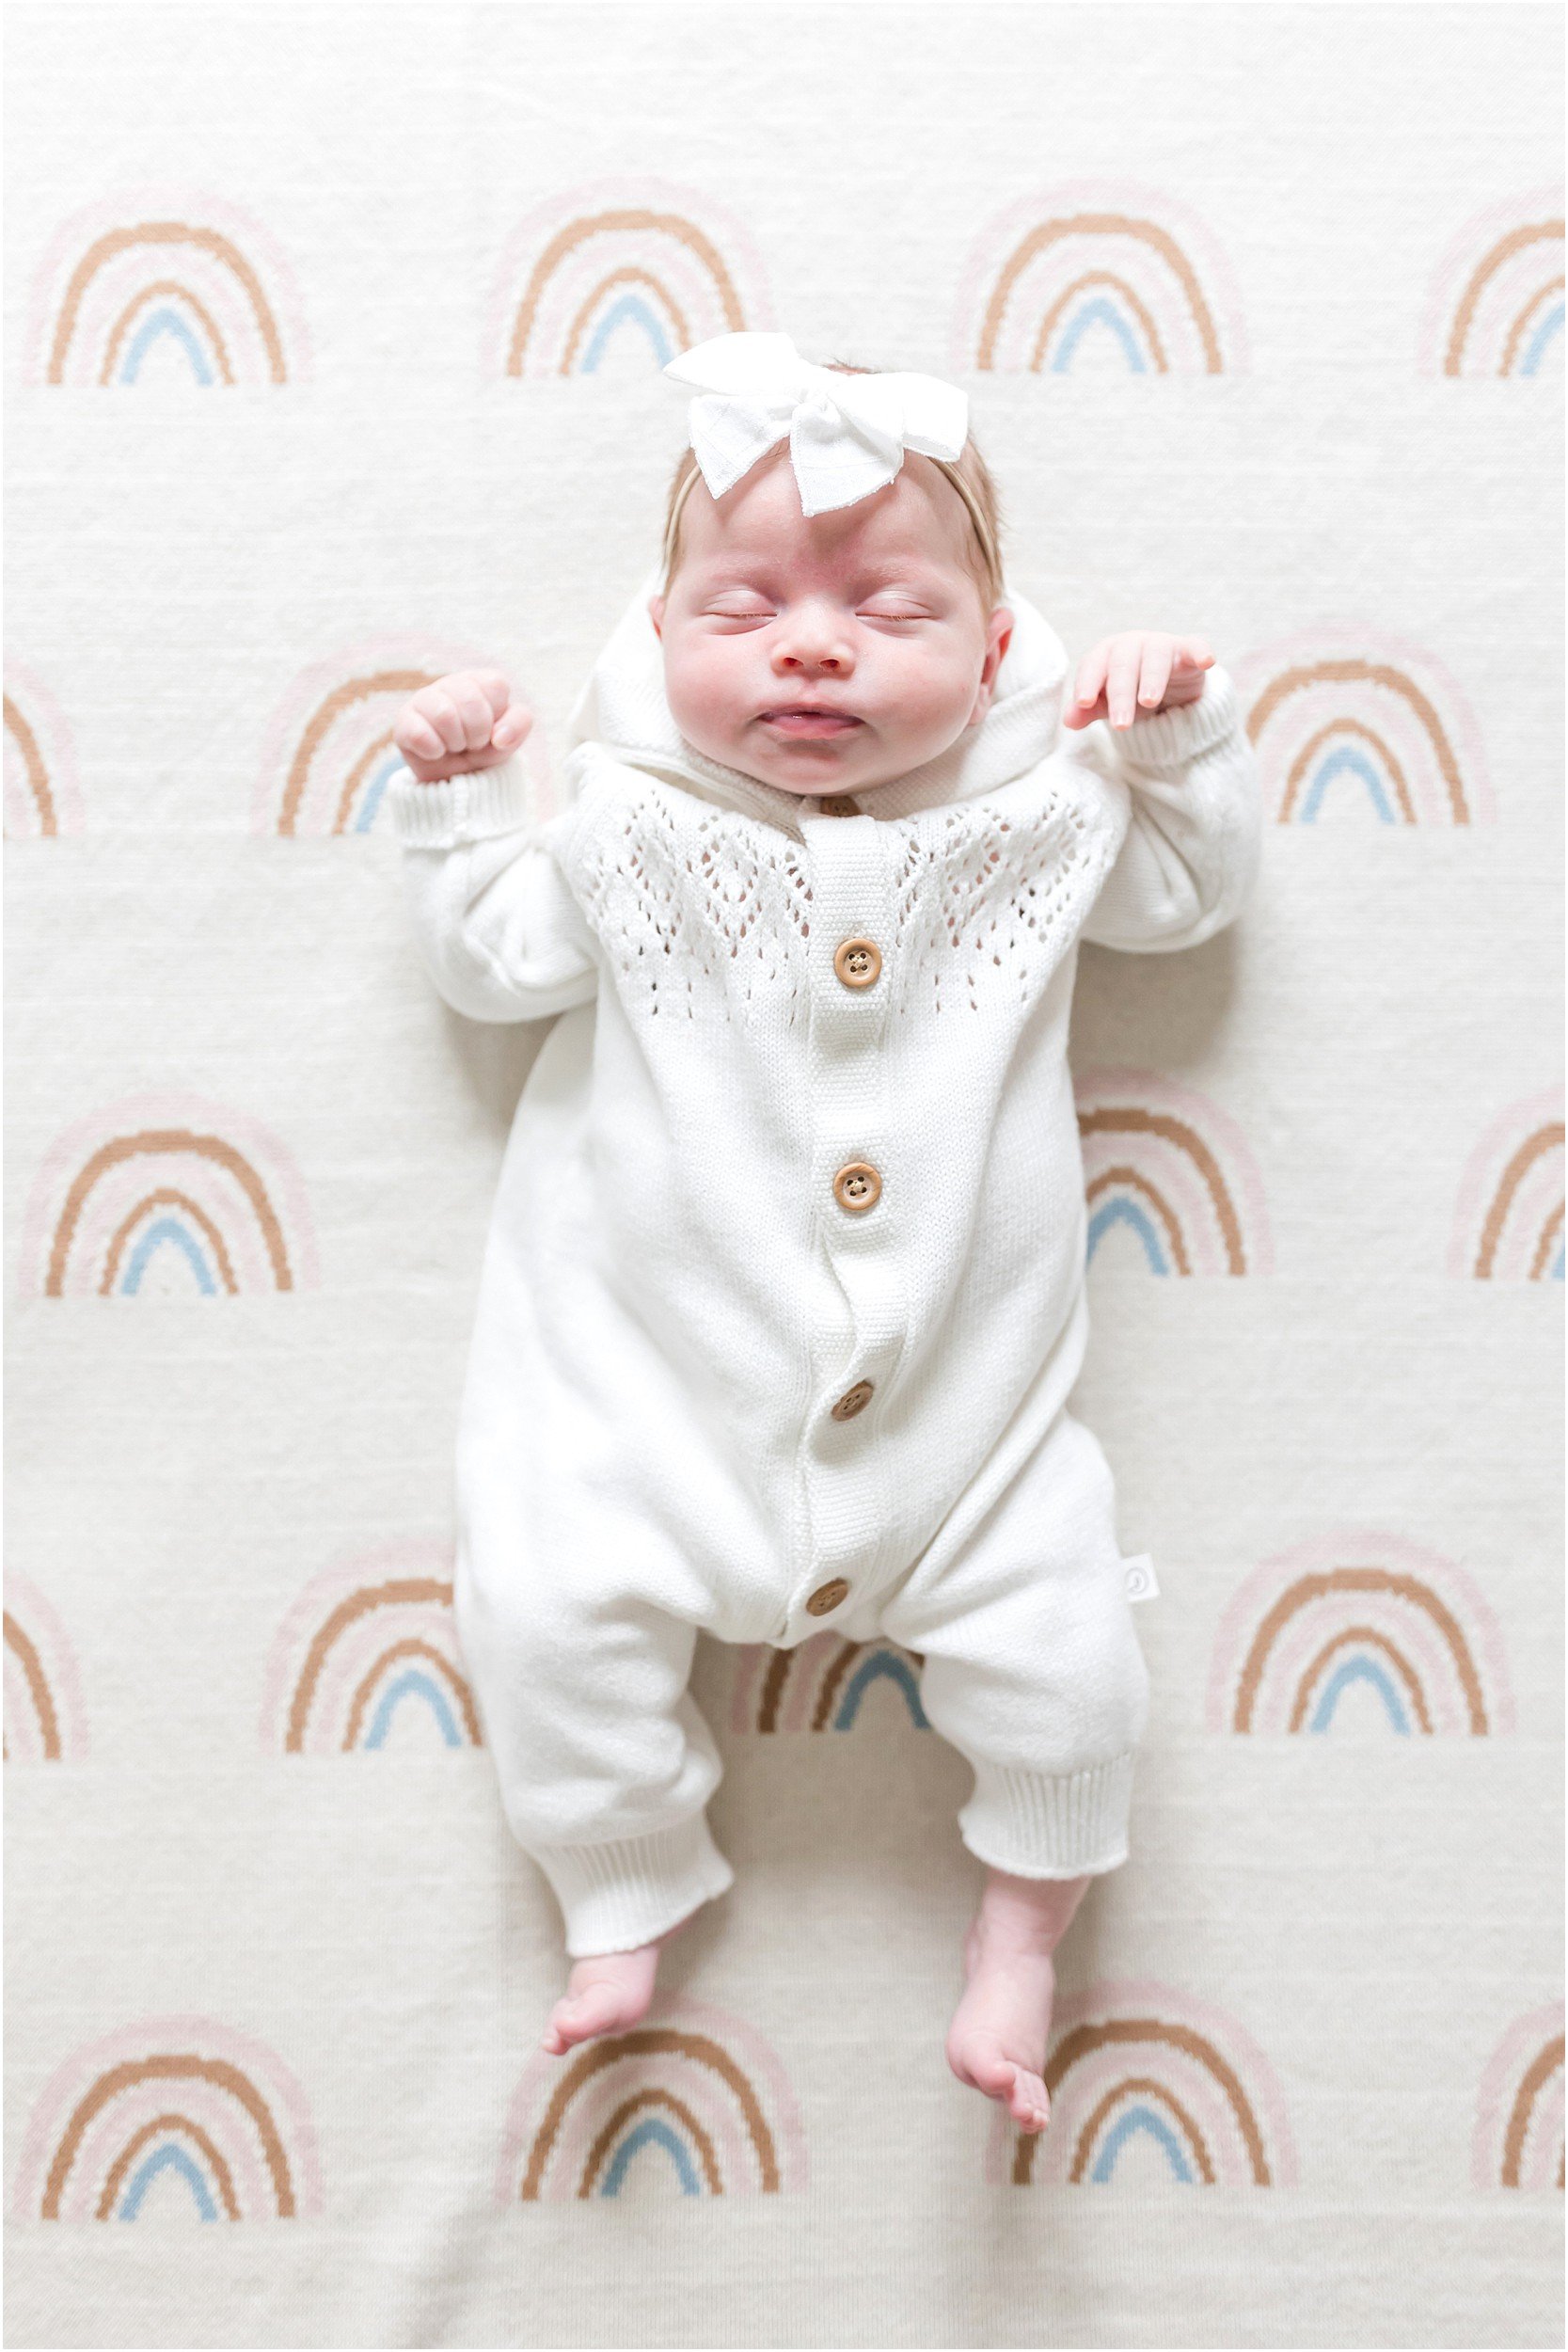 Schlegel Newborn-91_Cary-newborn-photographer.jpg